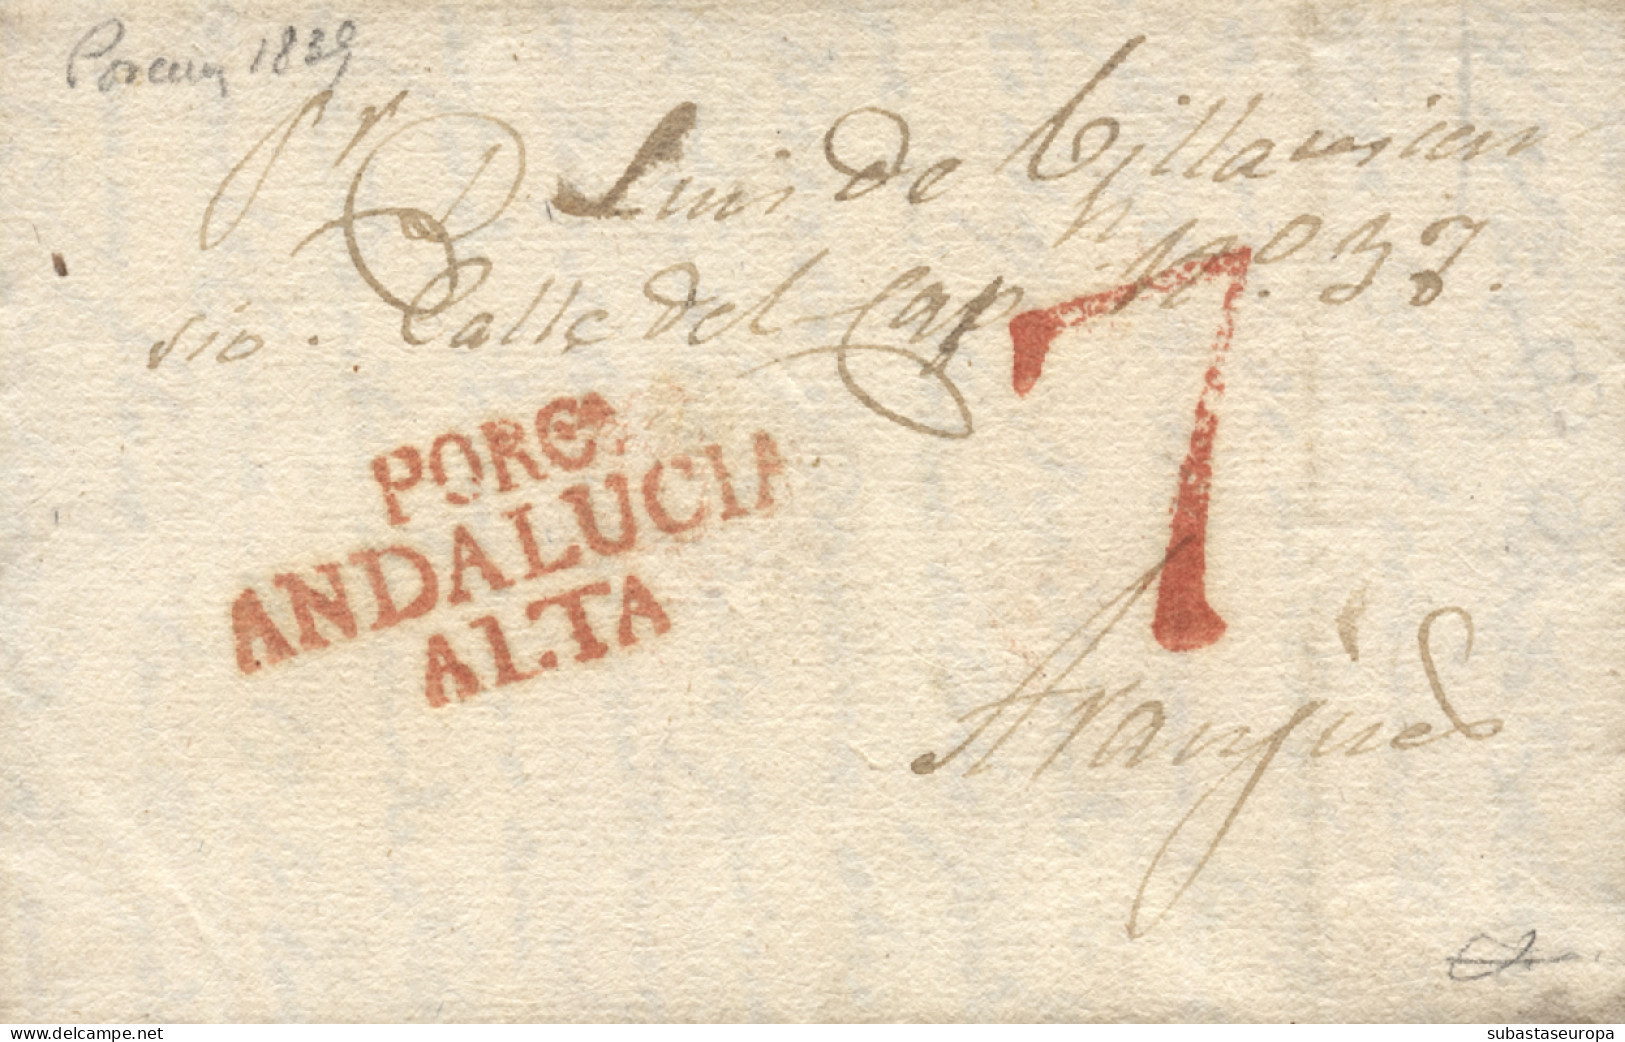 D.P. 24. 1839 (15 MAR). Carta De Porcuna A Aranjuez. Marca Nº 1R. Preciosa Y Rara. - ...-1850 Vorphilatelie